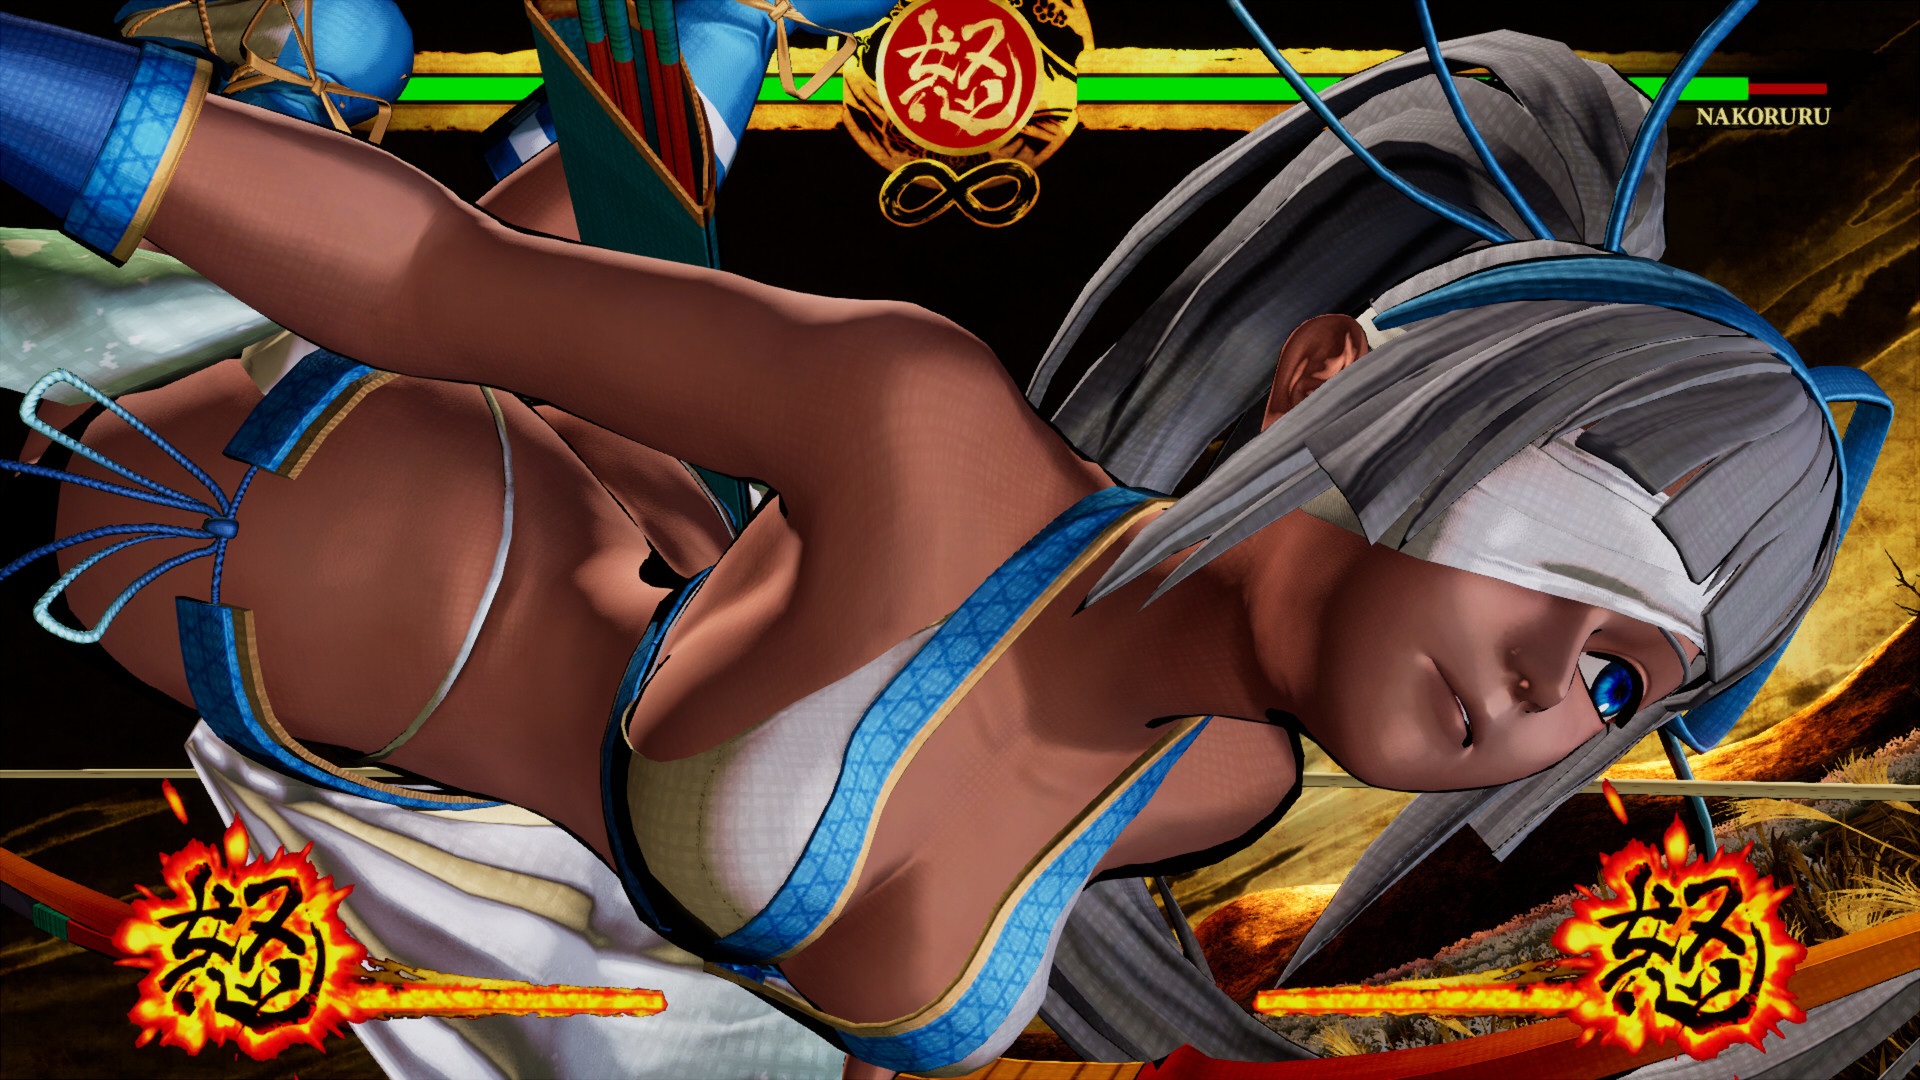 SAMURAI SHODOWN - DLC CHARACTER "MINA MAJIKINA" Featured Screenshot #1